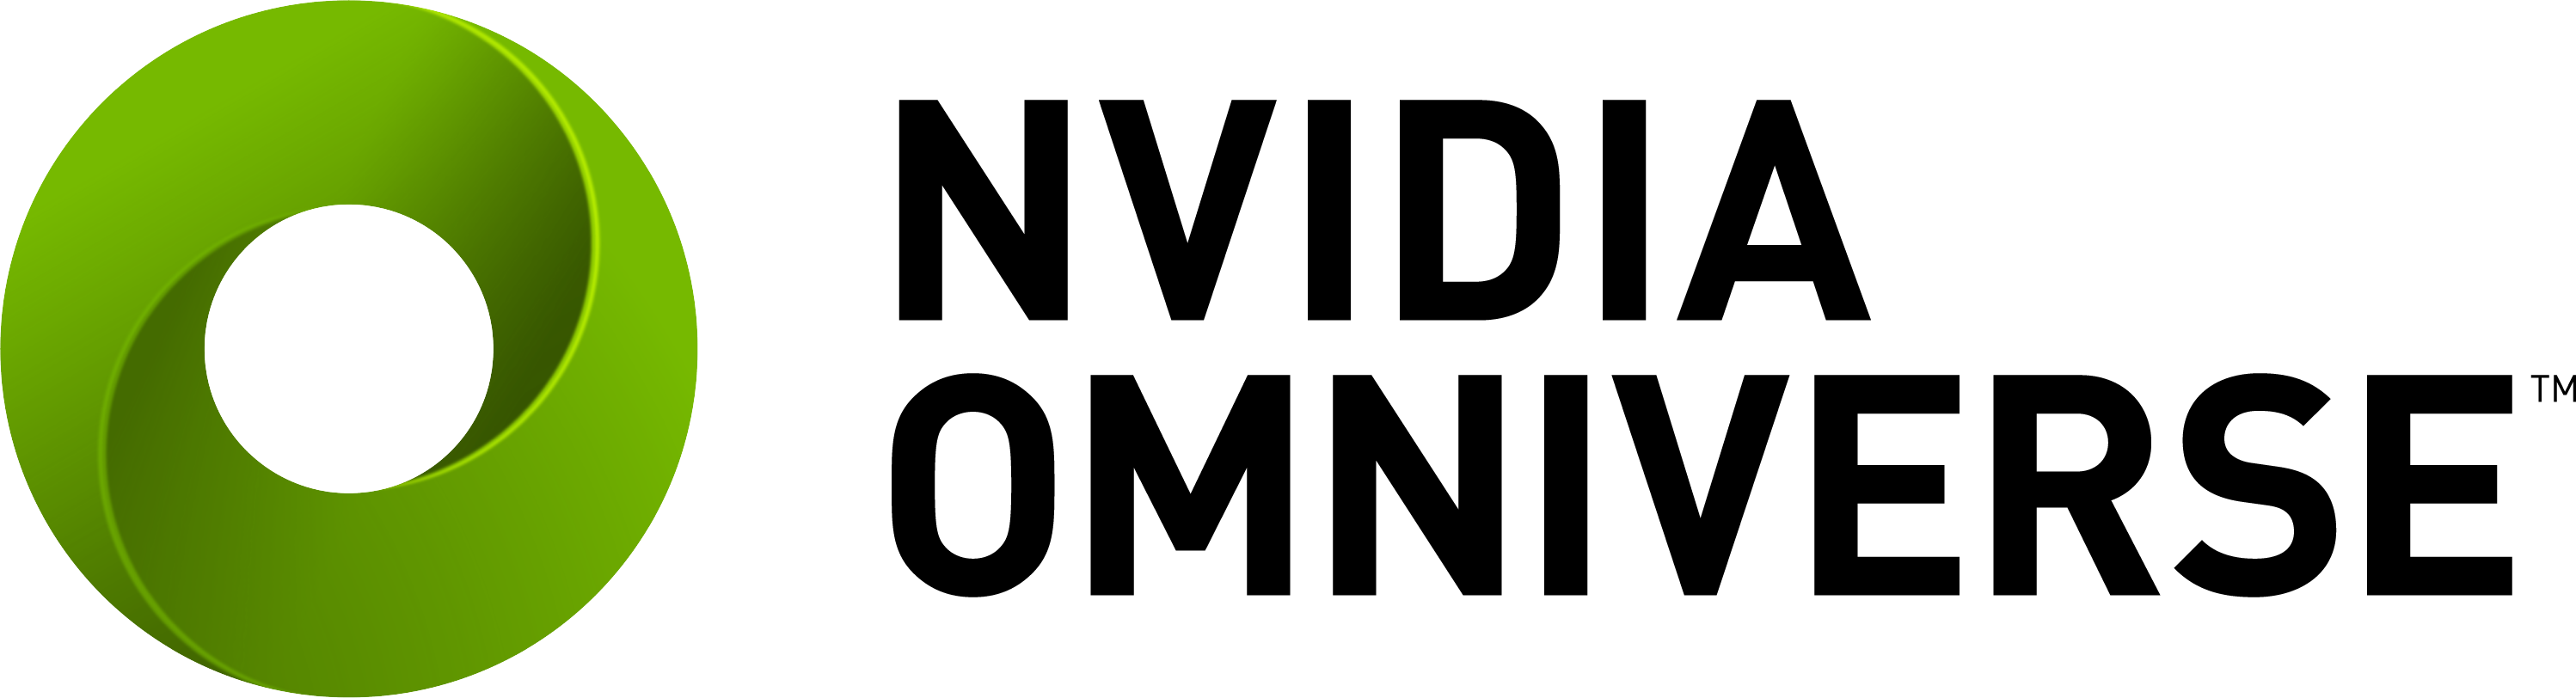 Nvidia Omniverse logo